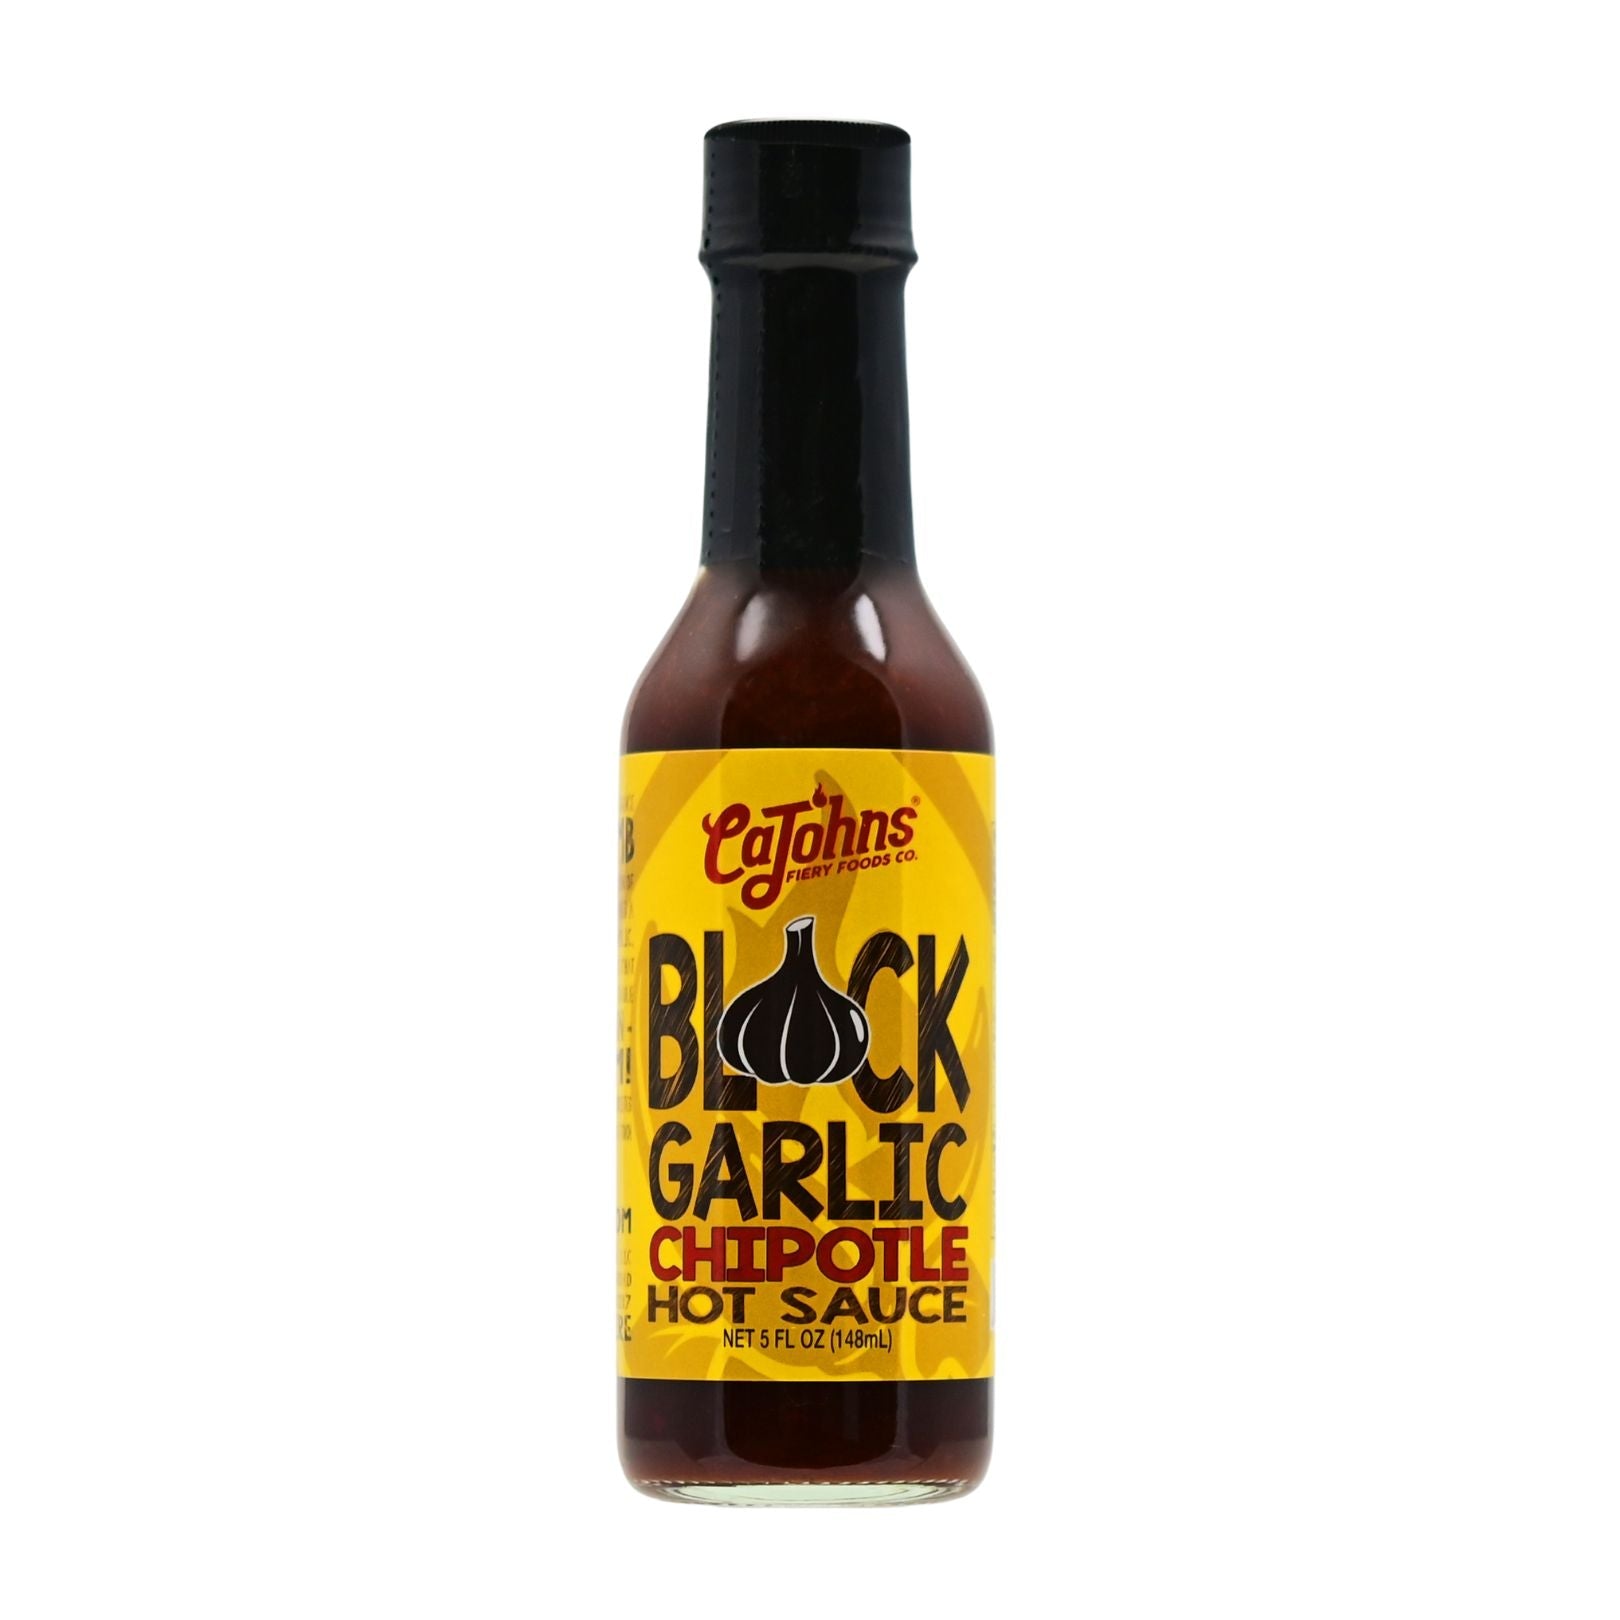 CaJohns Black Garlic Chipotle Hot Sauce